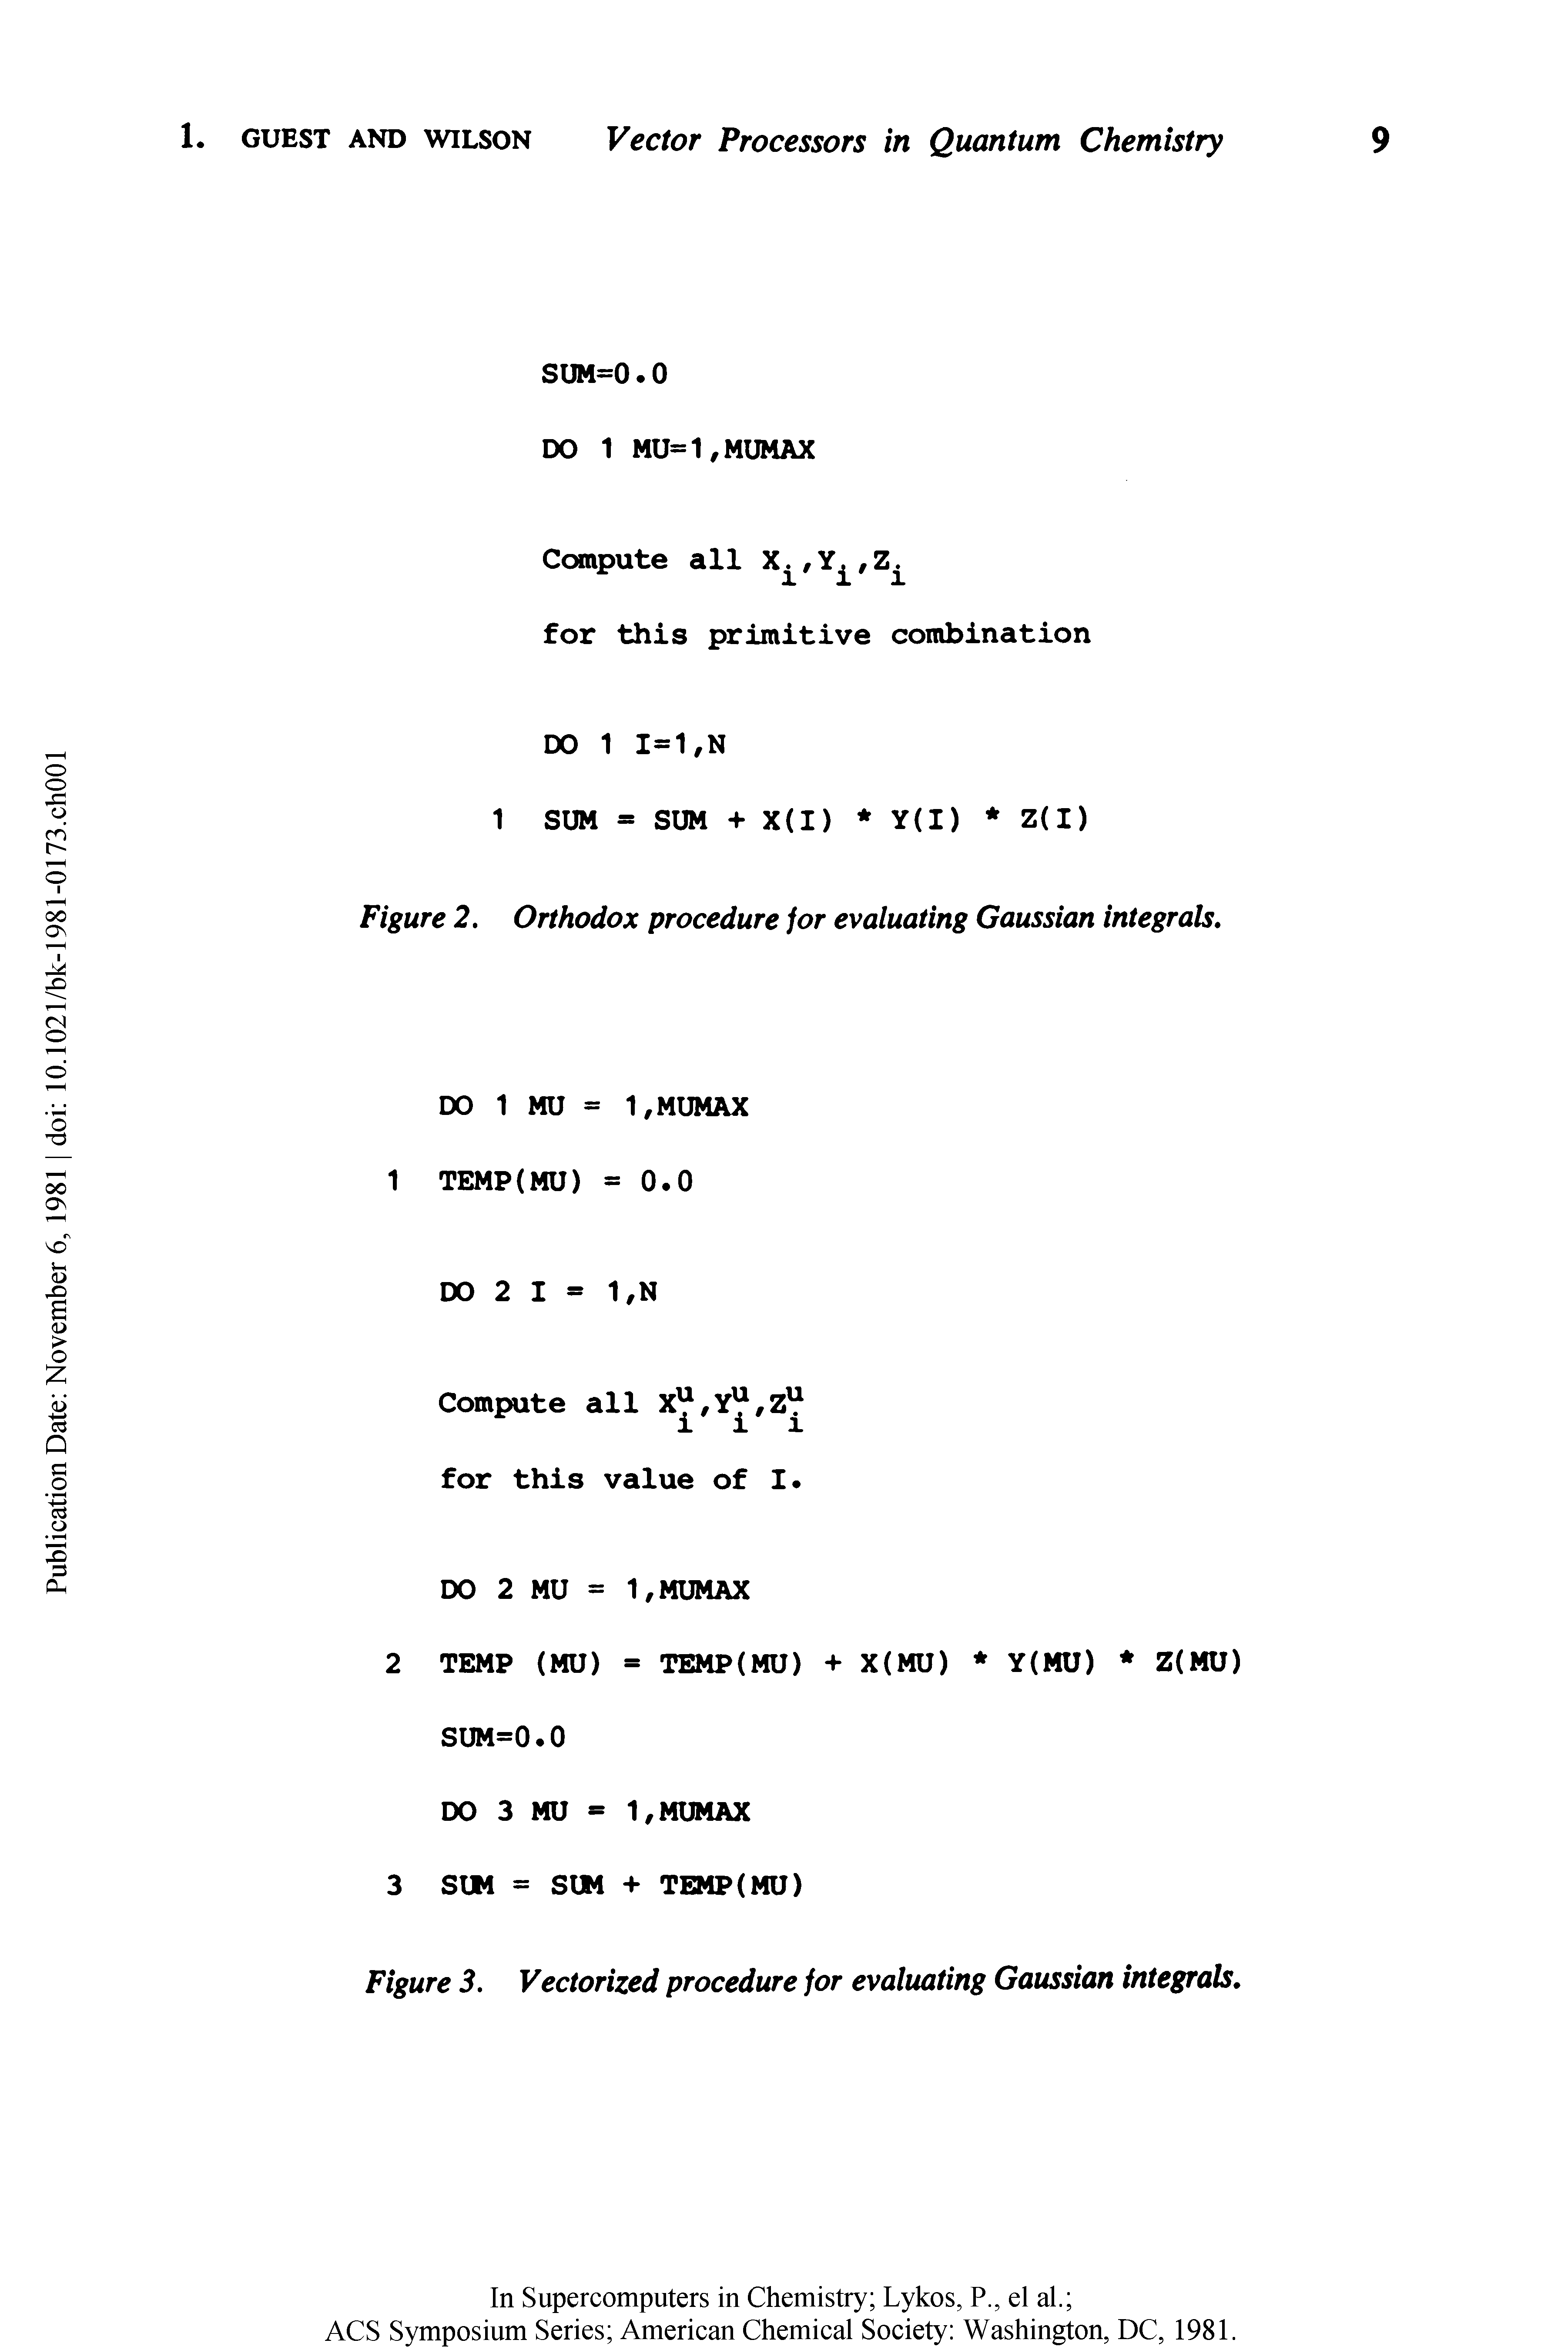 Figure 2. Orthodox procedure for evaluating Gaussian integrals.